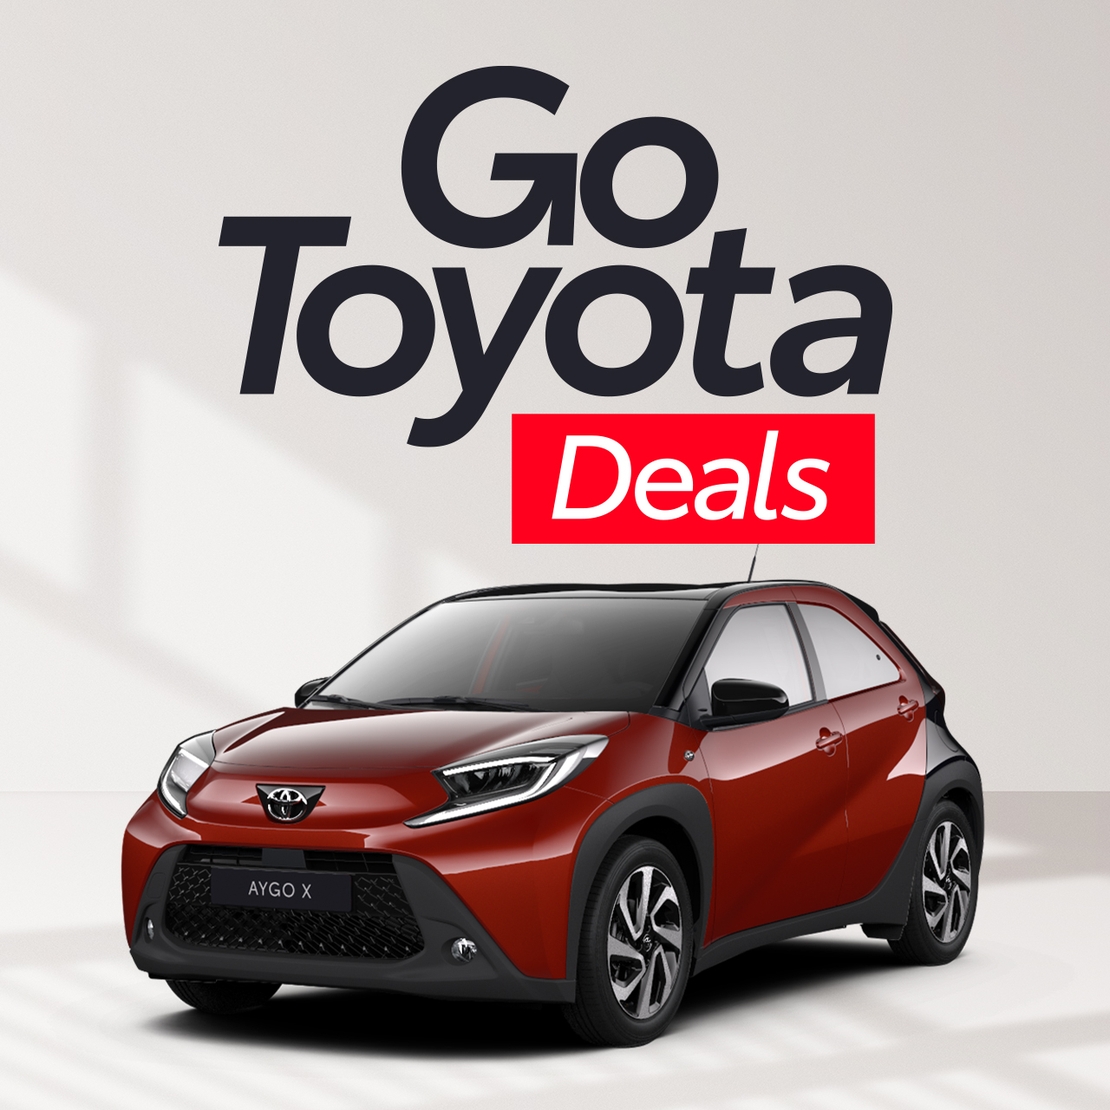 Toyota-Aygo-X-GoToyotaDeals-logo-PL